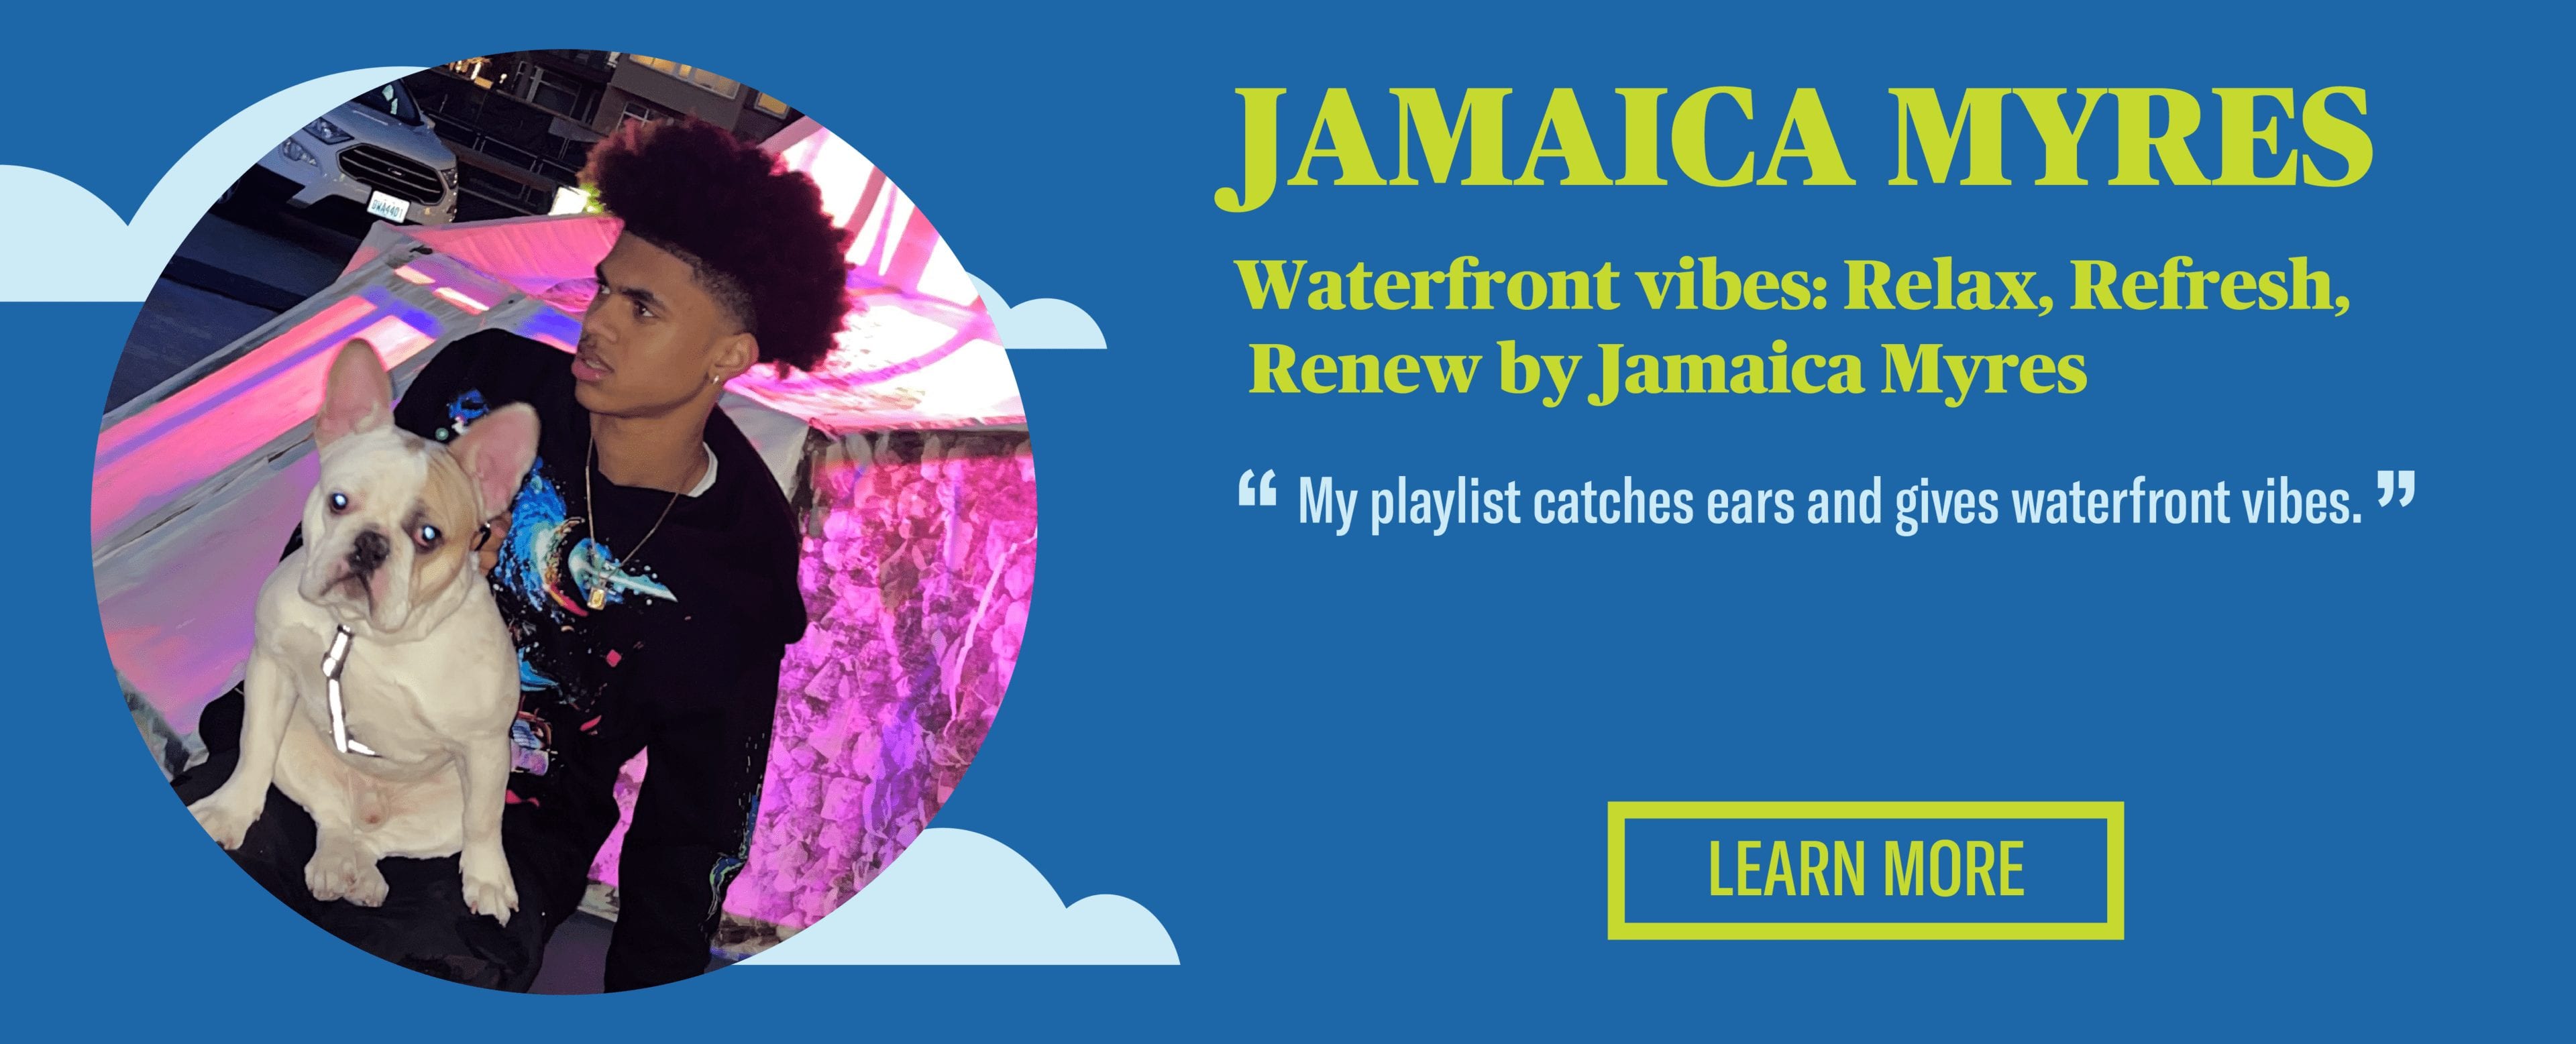 Jamaica Myres